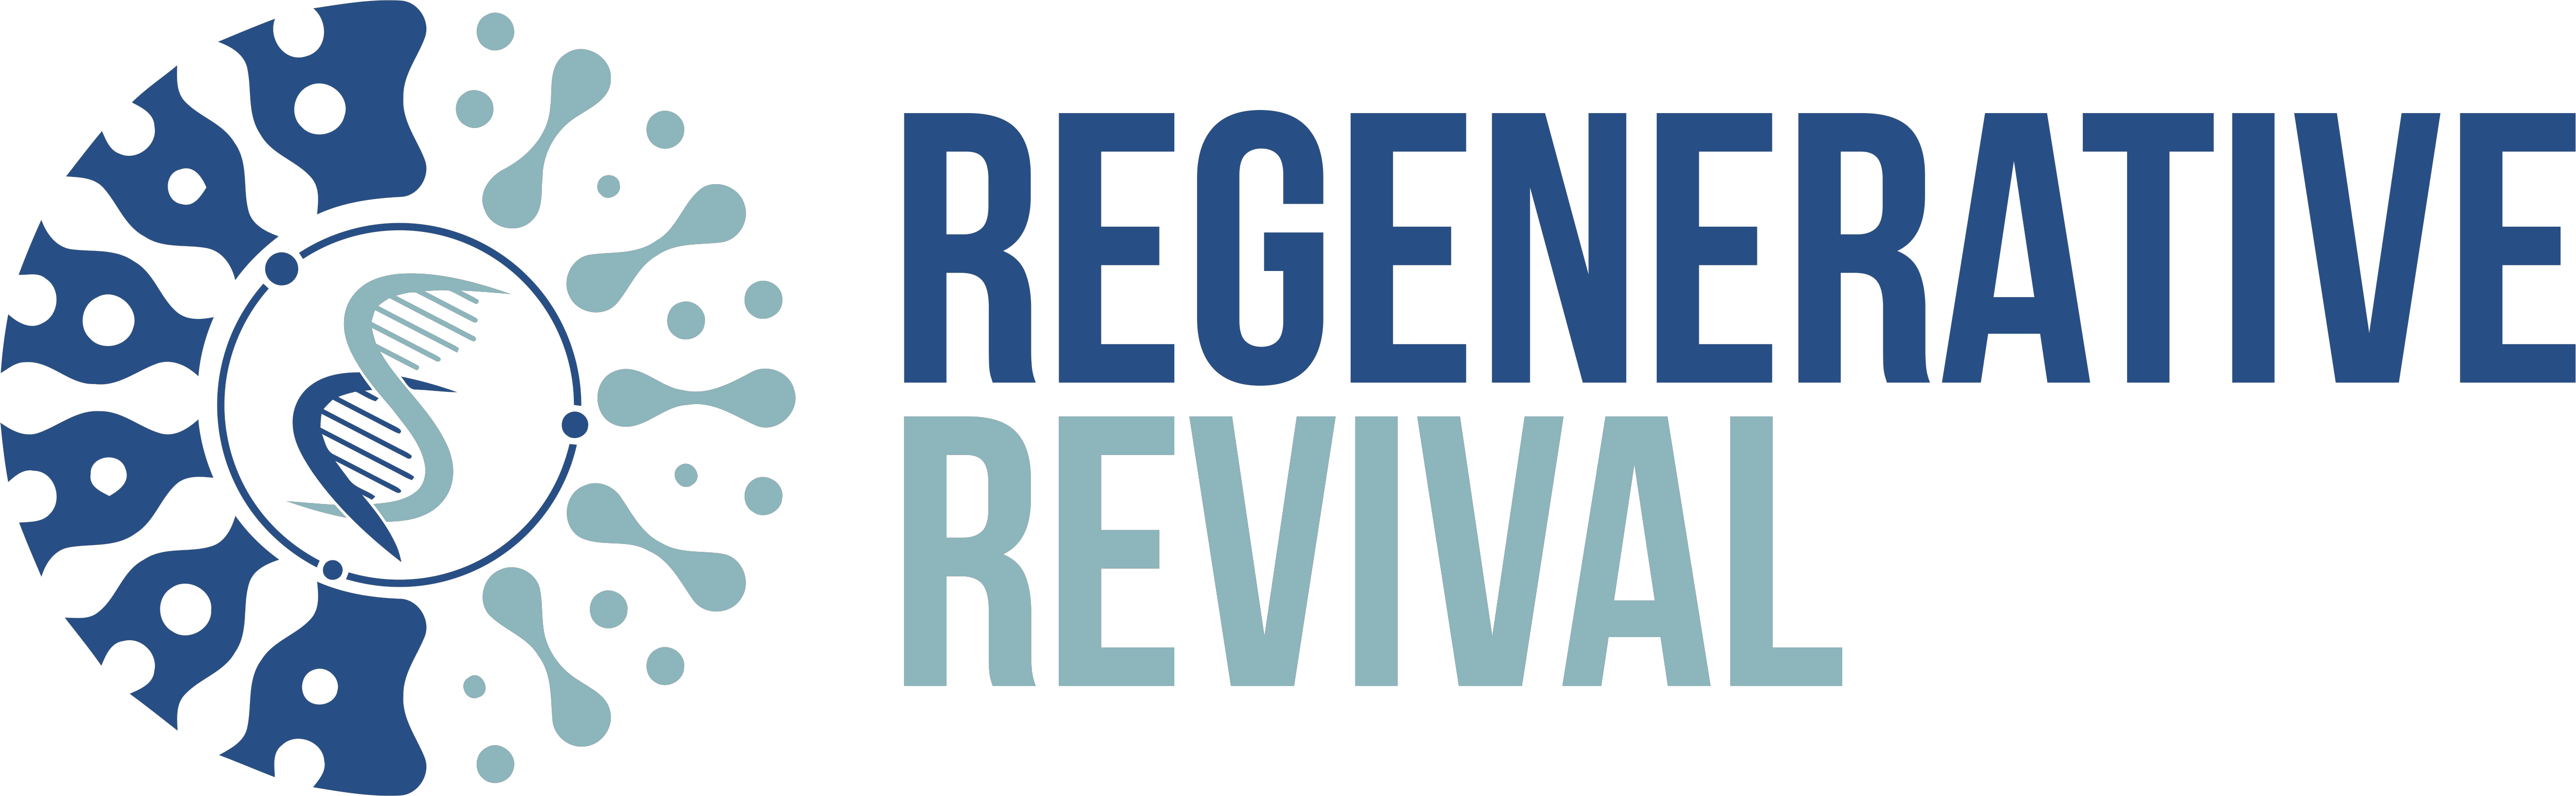 Regenerative Revival logo